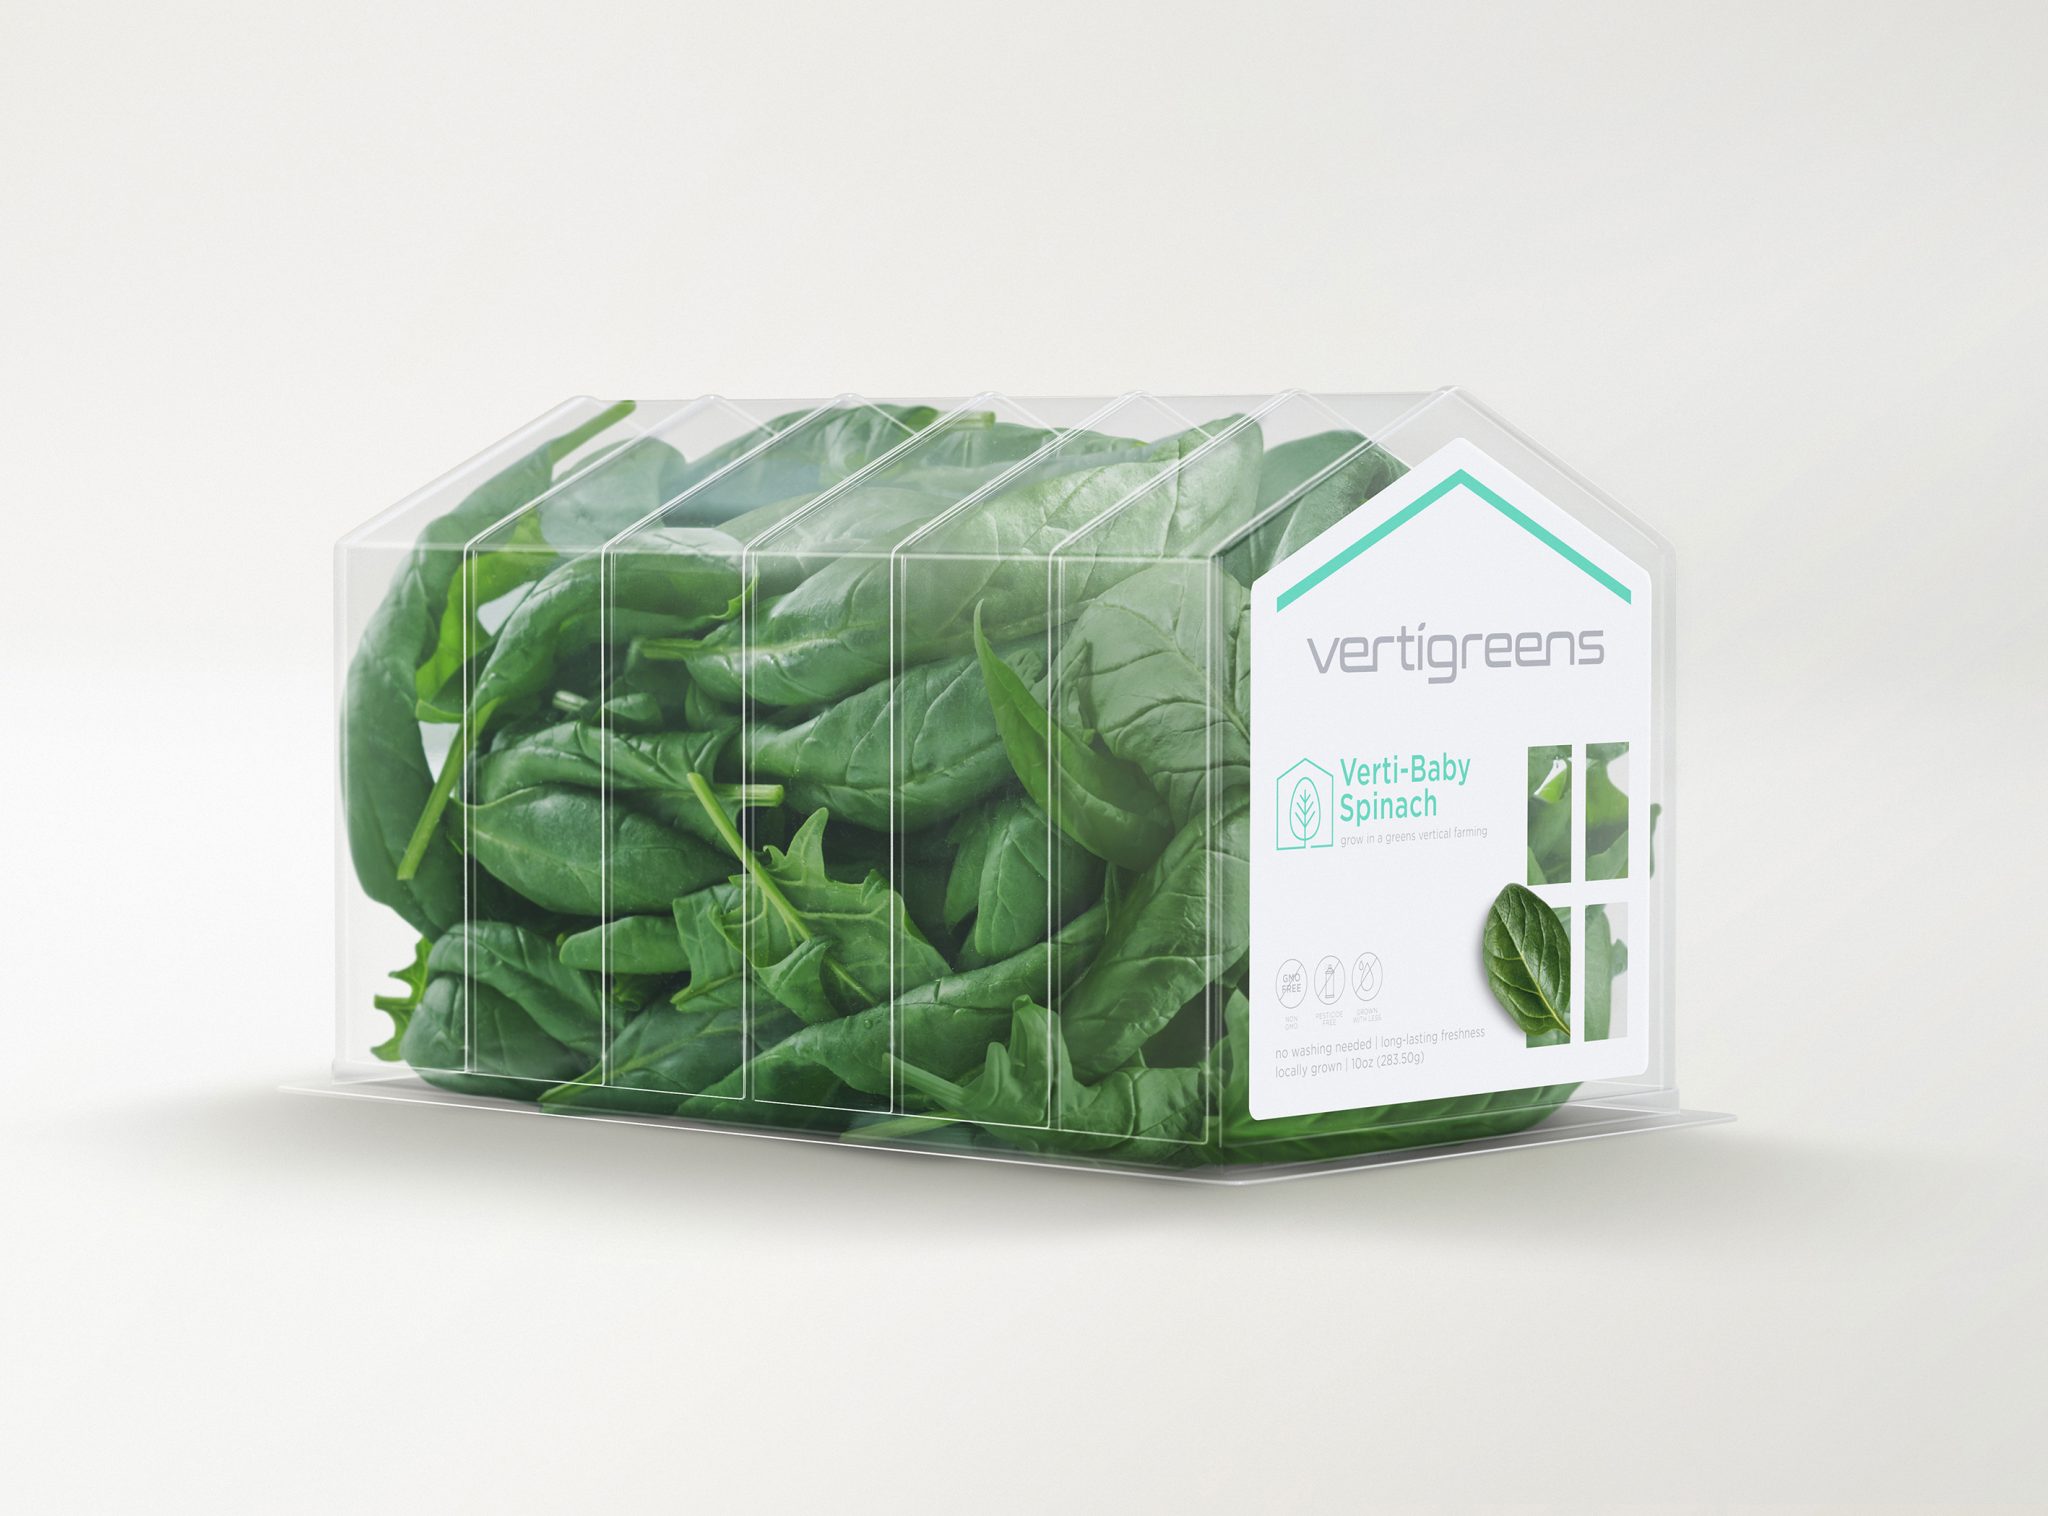 Vertigreens 垂直种植生态蔬菜包装设计“温室大棚房屋造型透明塑料盒”